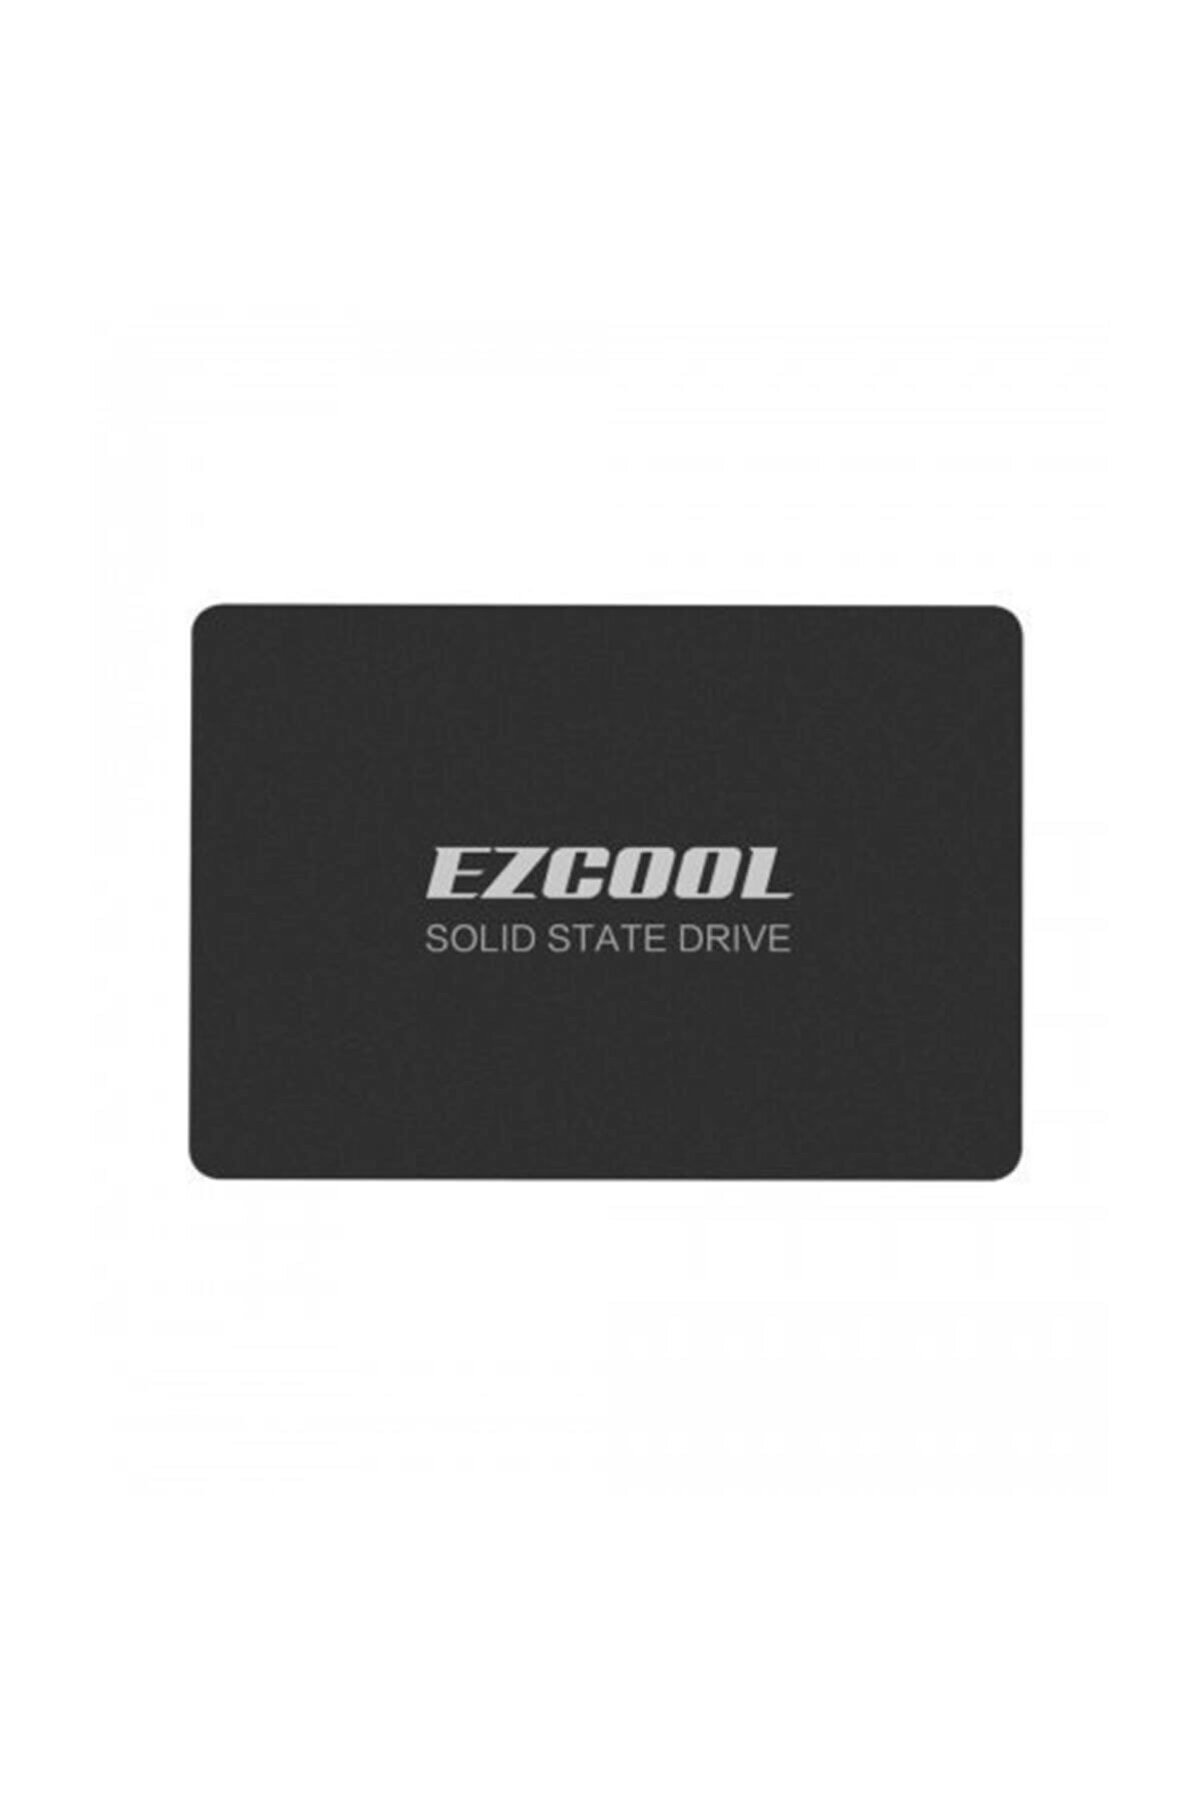 EZCOOL 480gb Ssd S280-480gb 3d Nand 2,5" 560-530 Harddisk